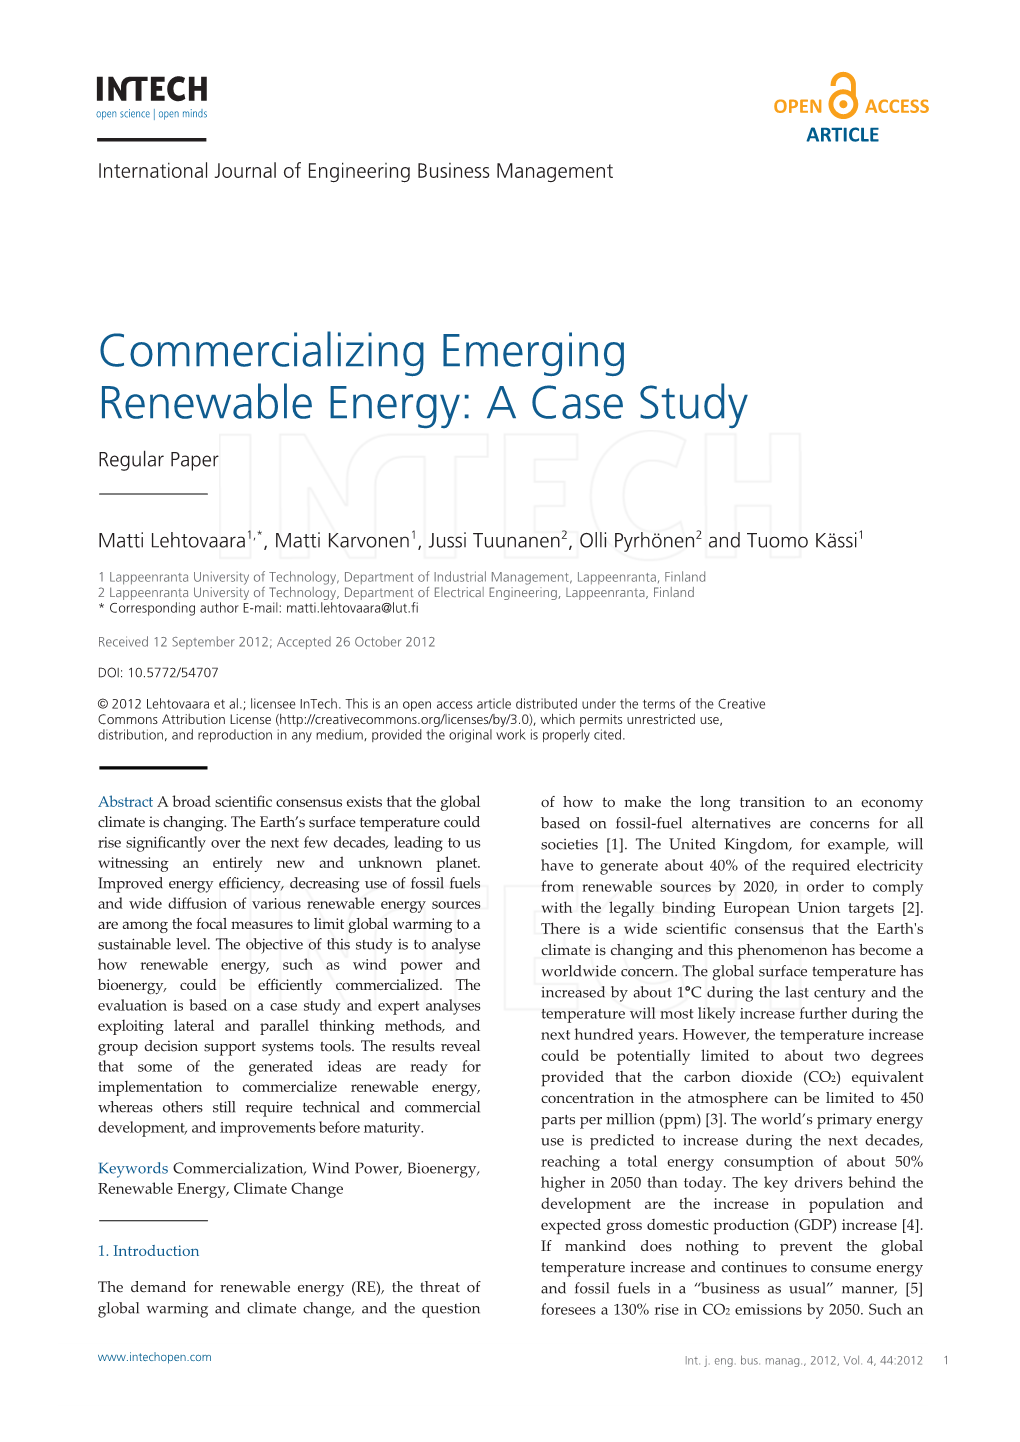 Commercializing Emerging Renewable Energy: a Case Study